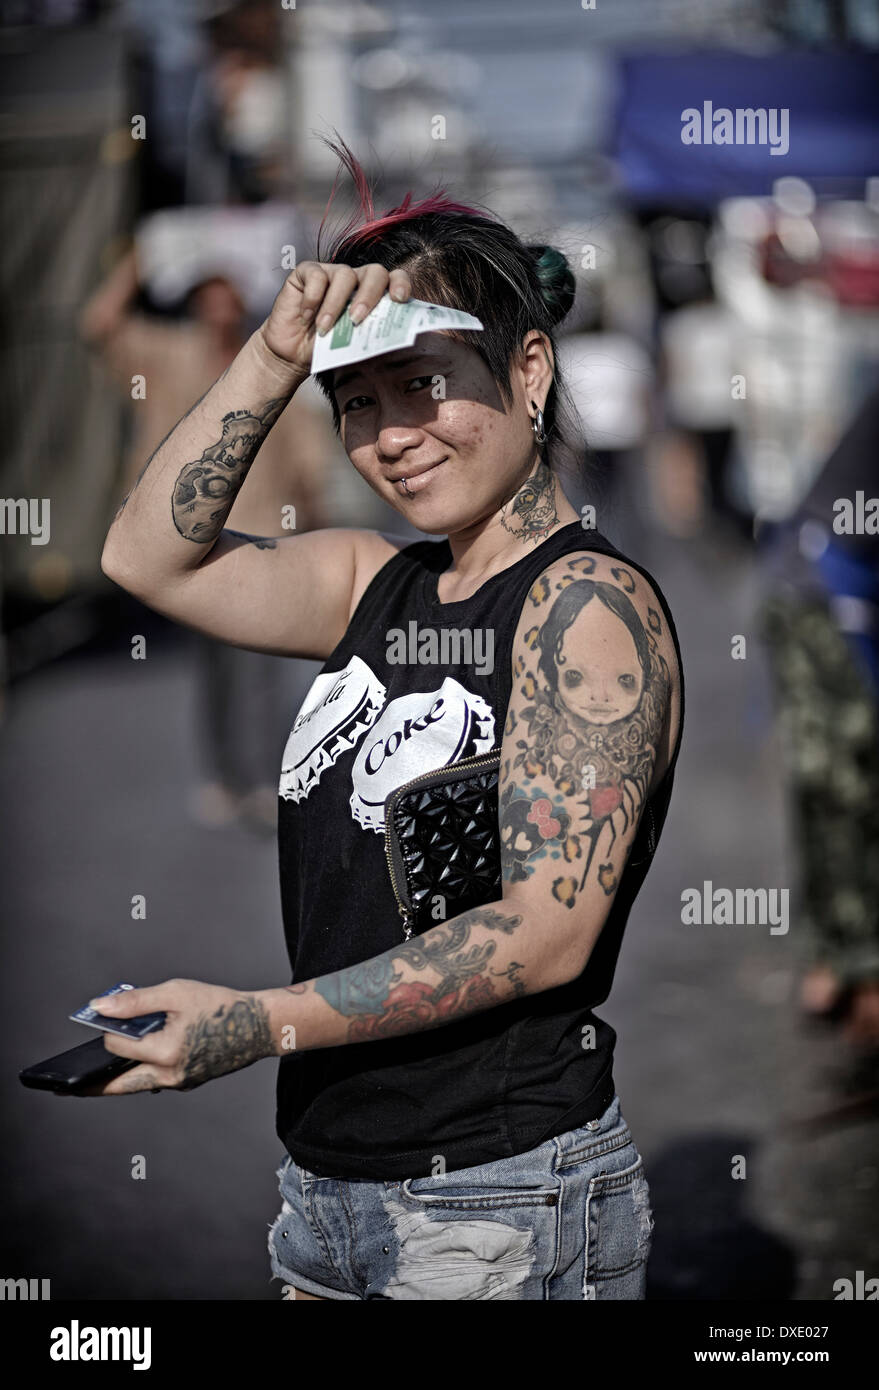 Woman with tattooed arm. Thailand S. E. Asia Stock Photo